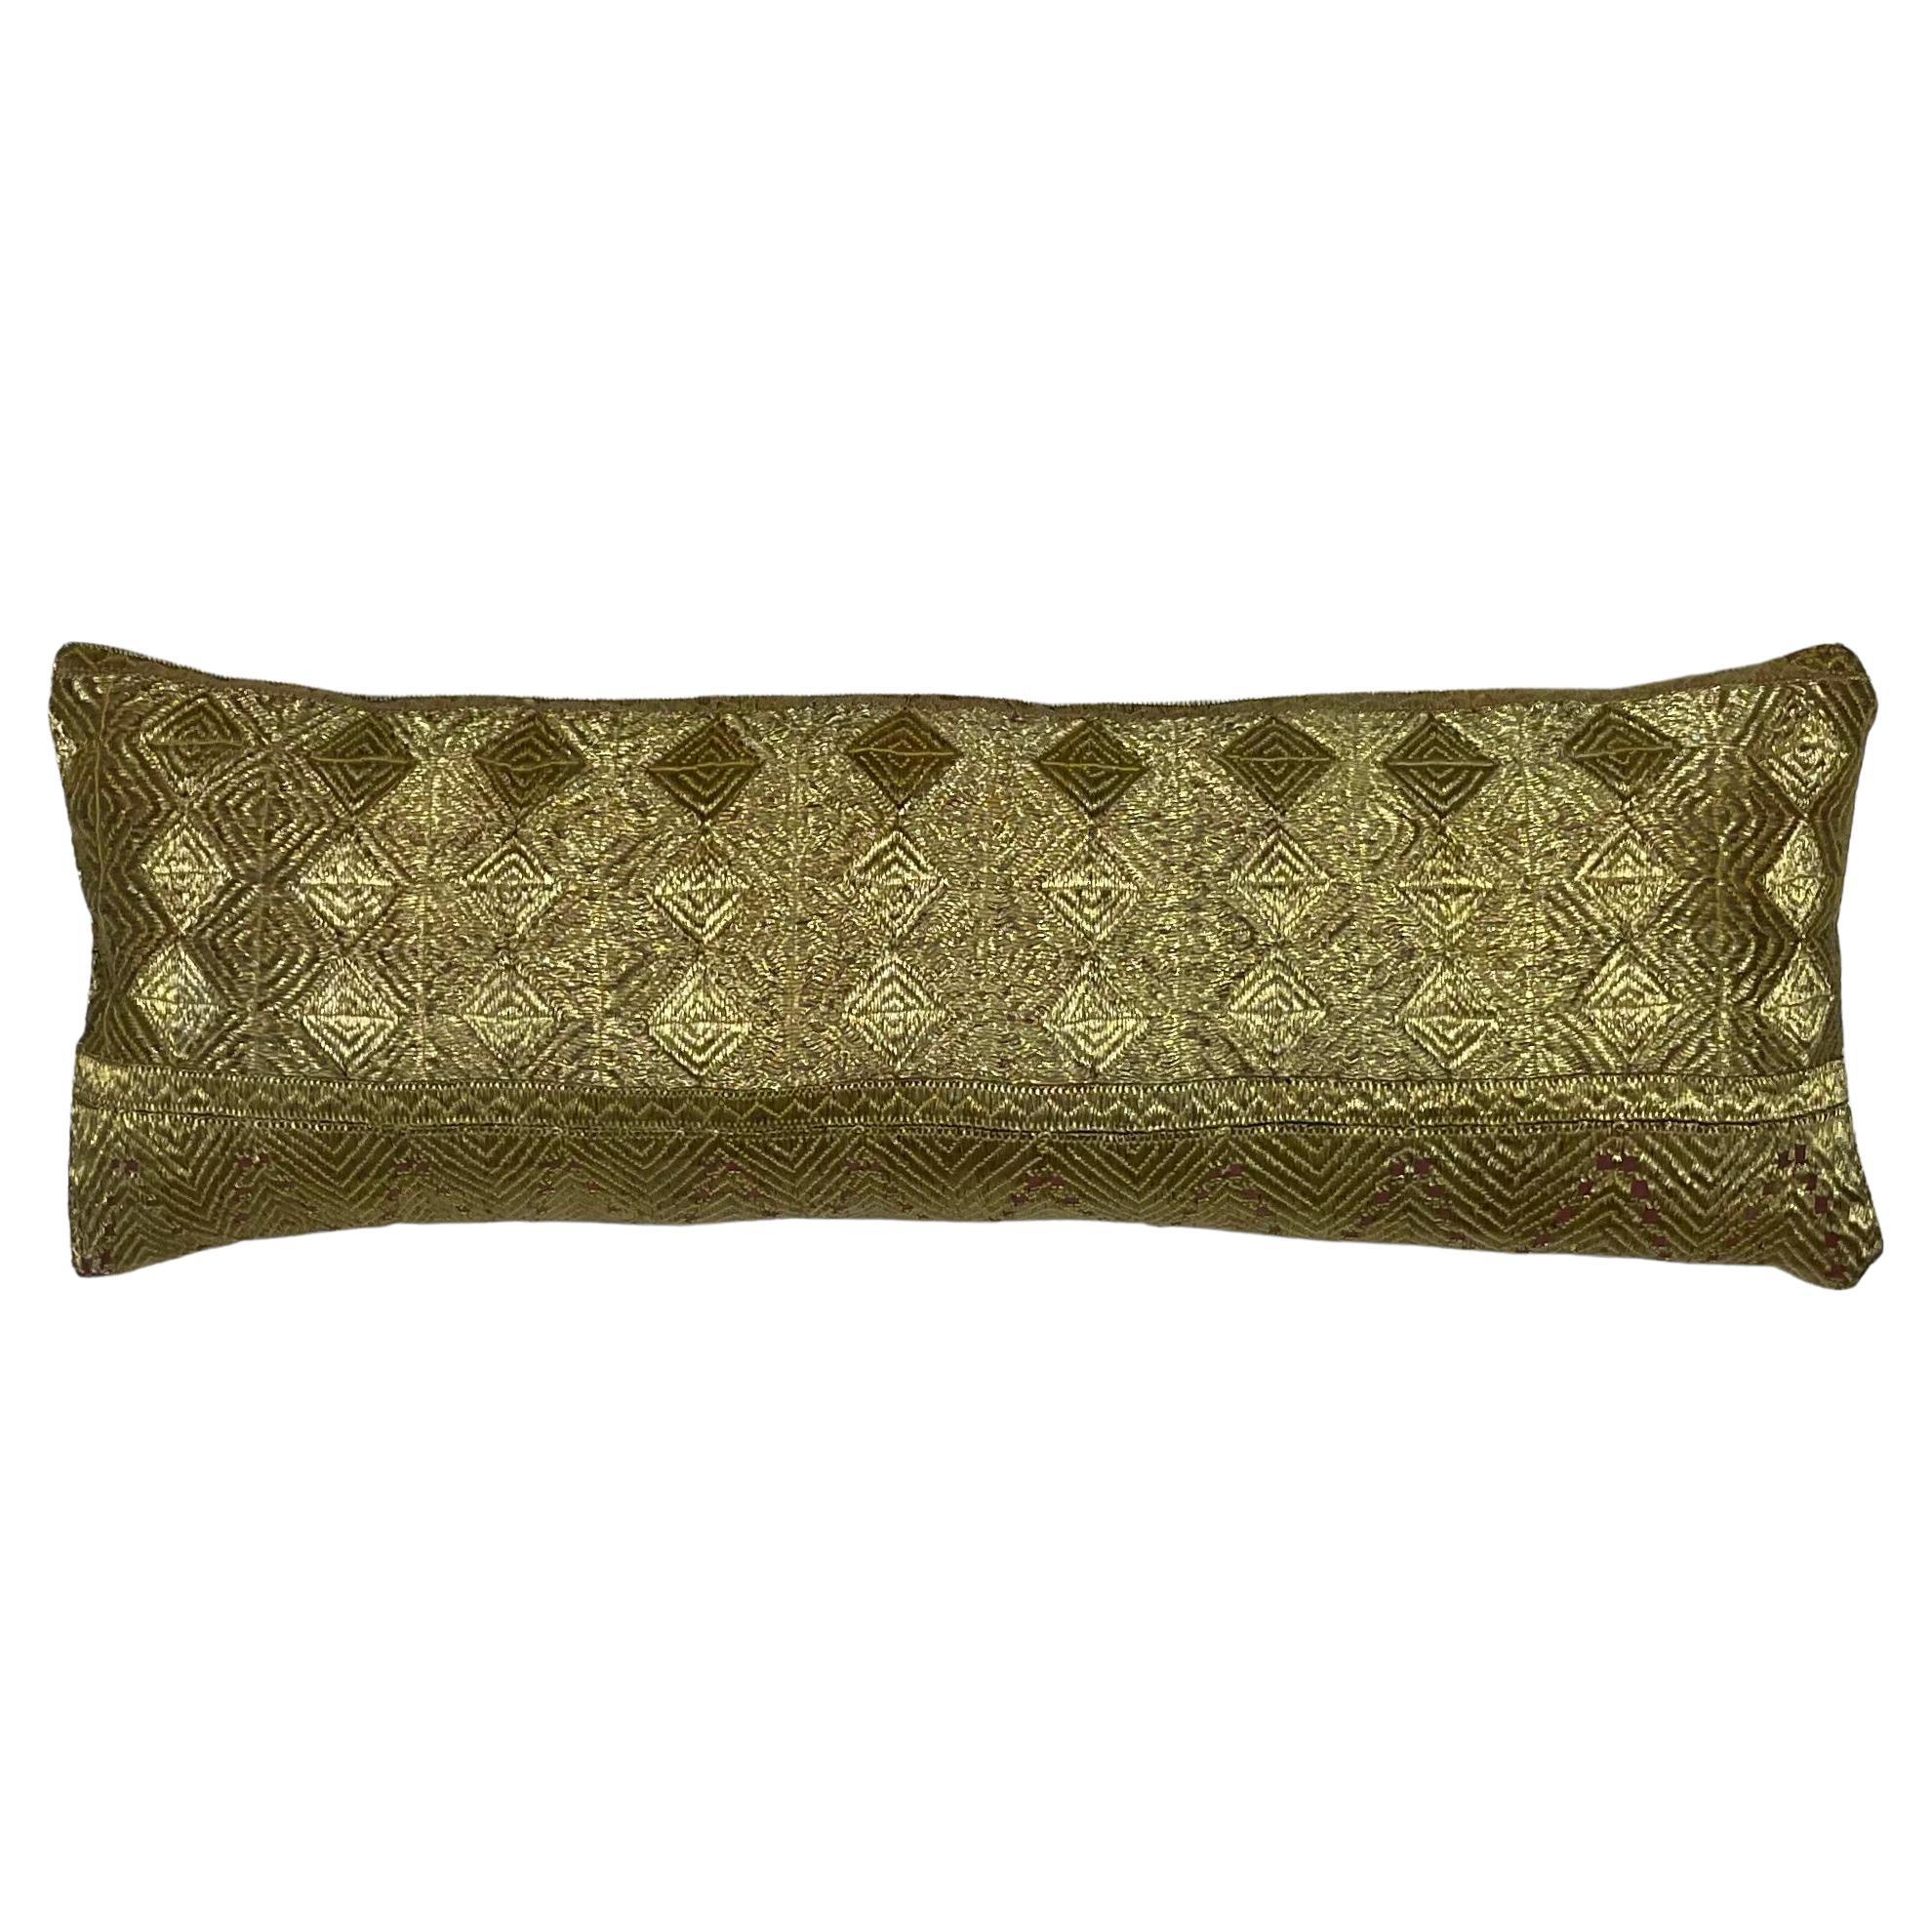 Single Antique Embroidery Textile Pillow 